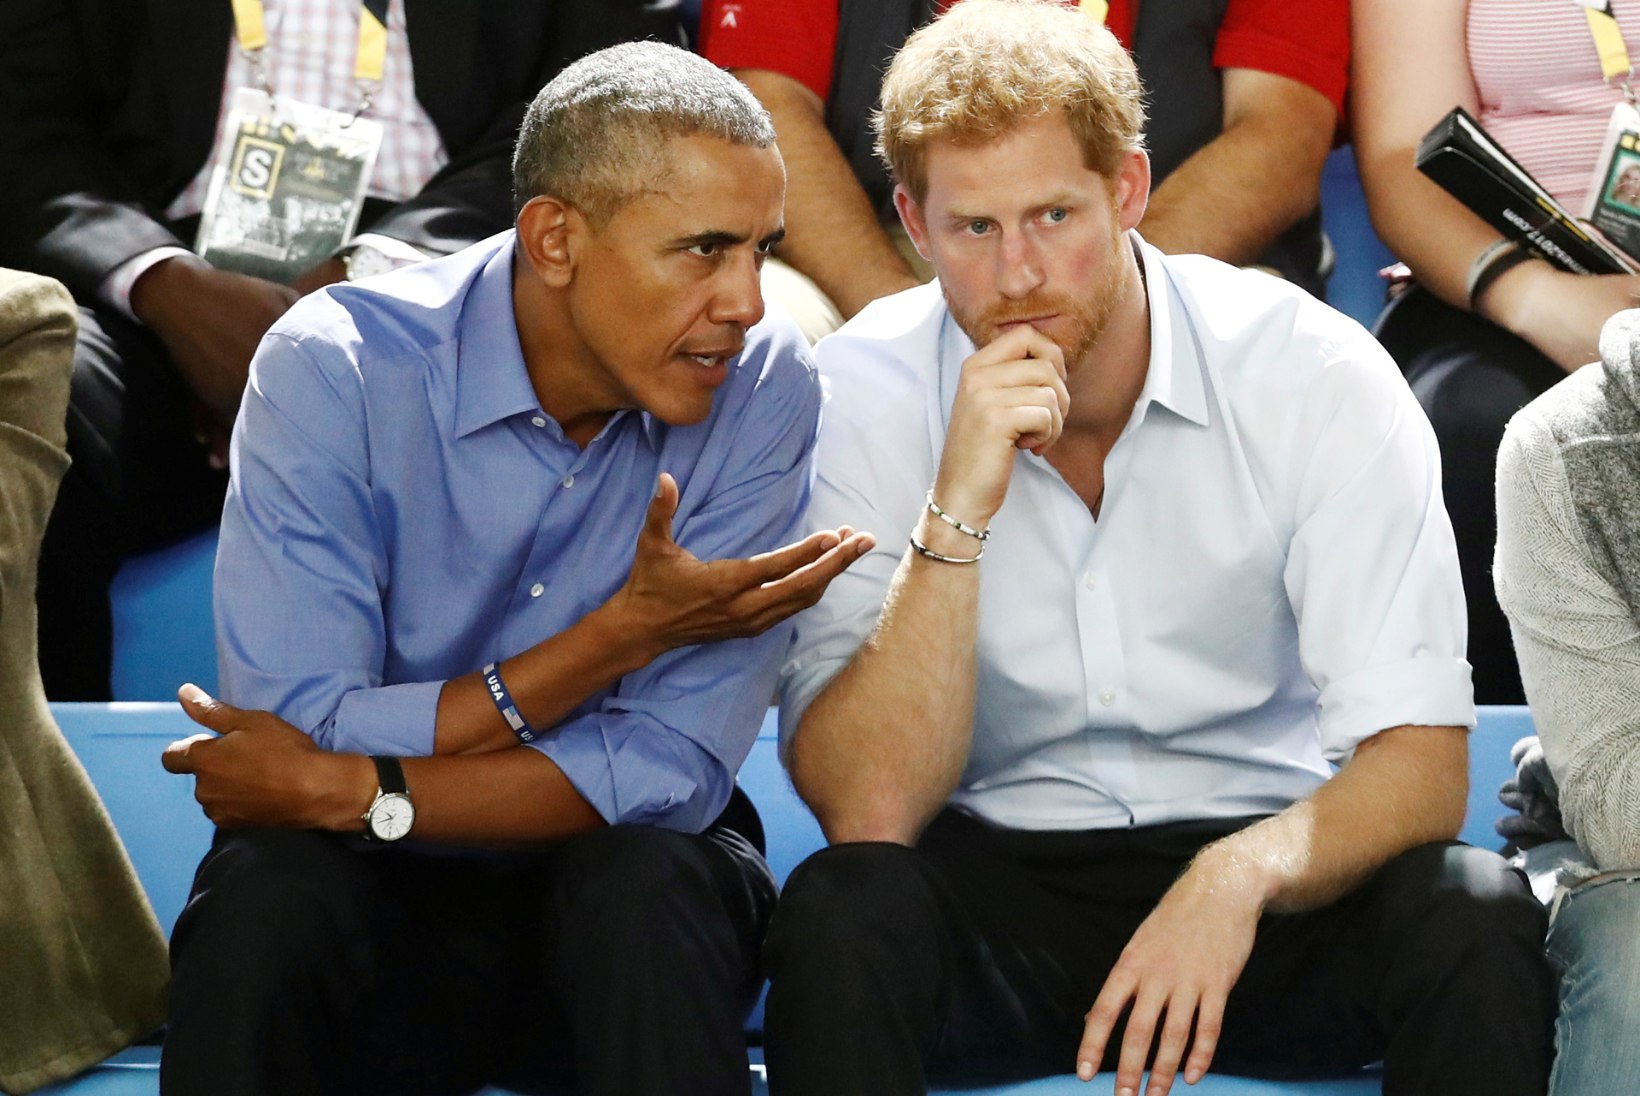 Leht: Briti valitsus anub, et prints Obamat pulma ei kutsuks